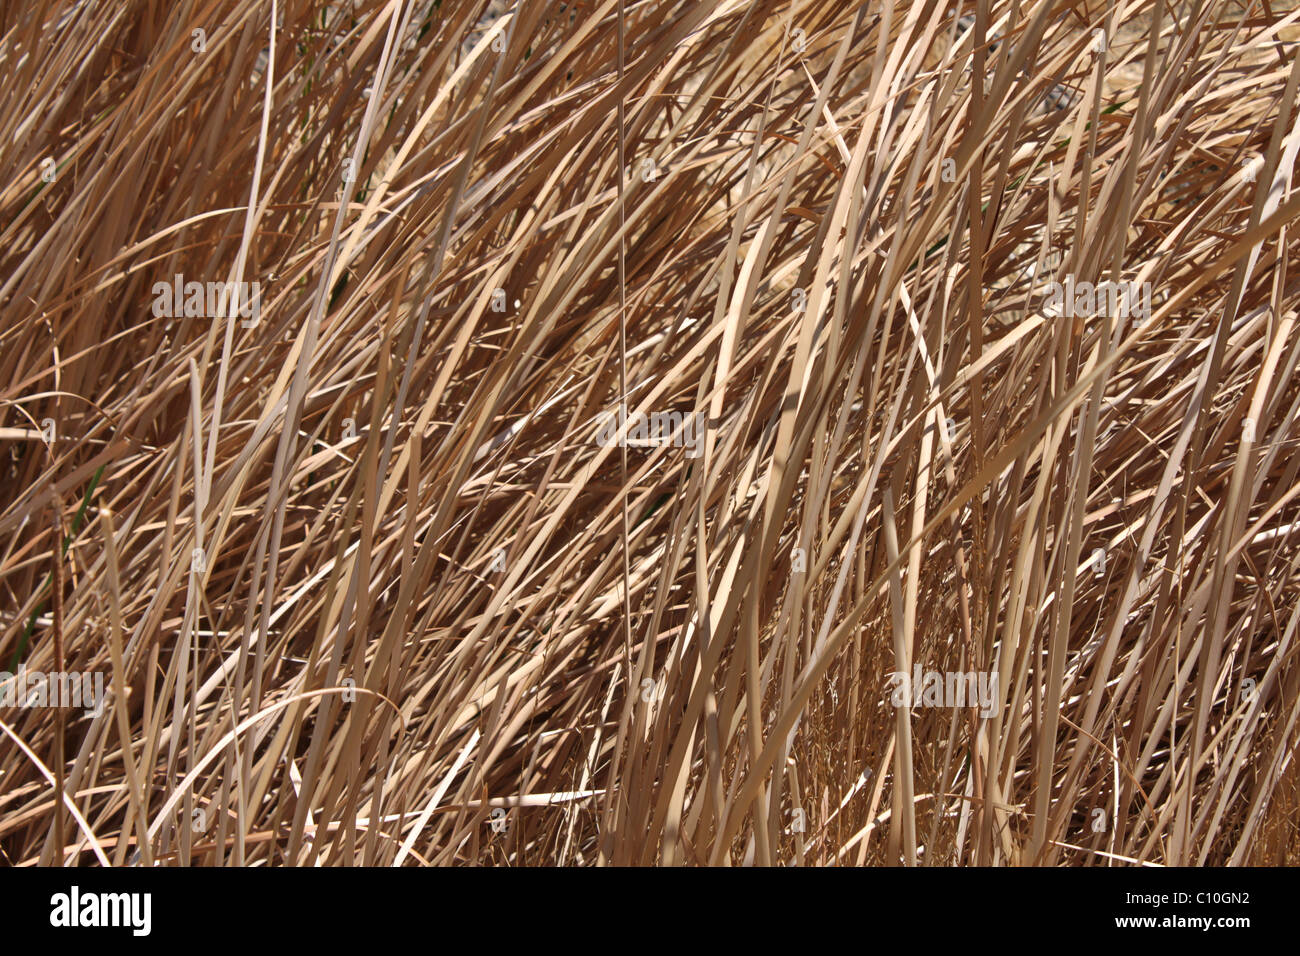 Dead grass background Stock Photo